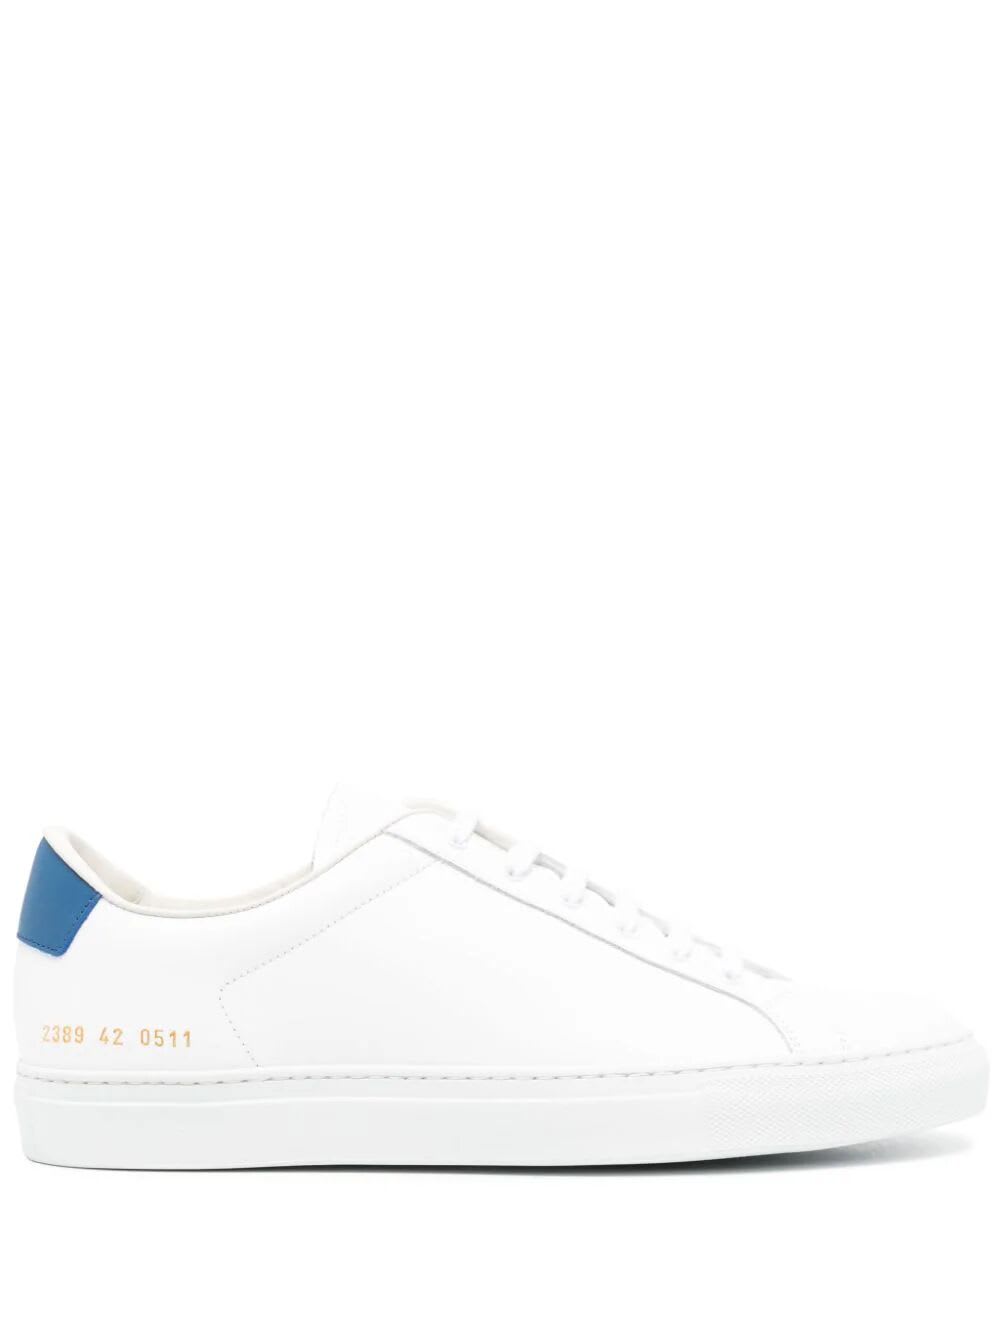 Common Projects Retro Classic Sneaker In White Blue